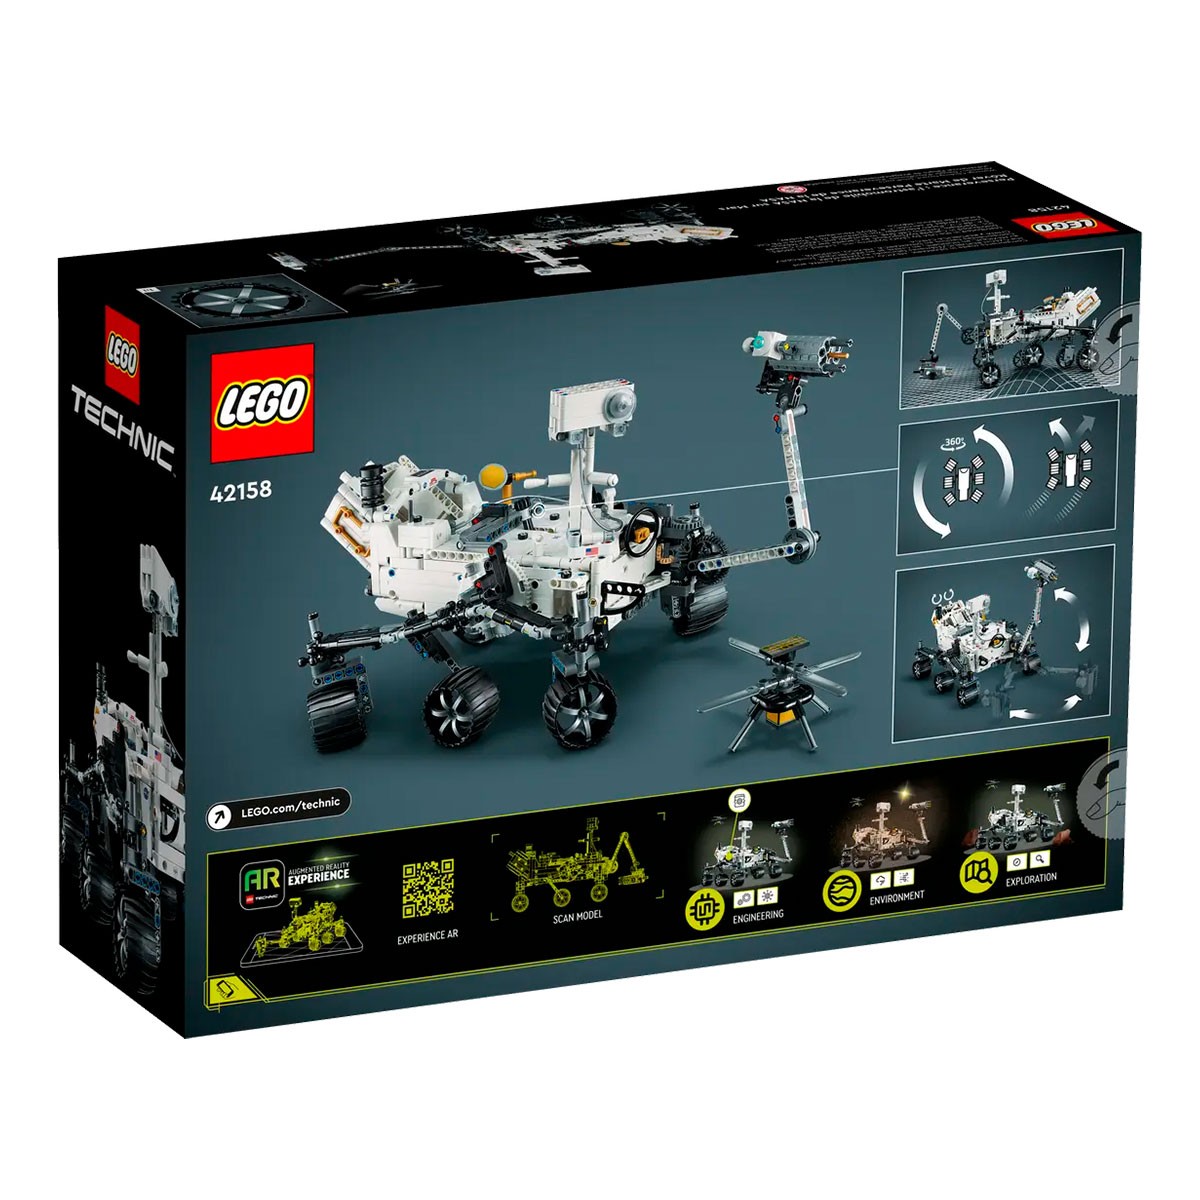  Playmobil Mars Rover, Multi : Toys & Games